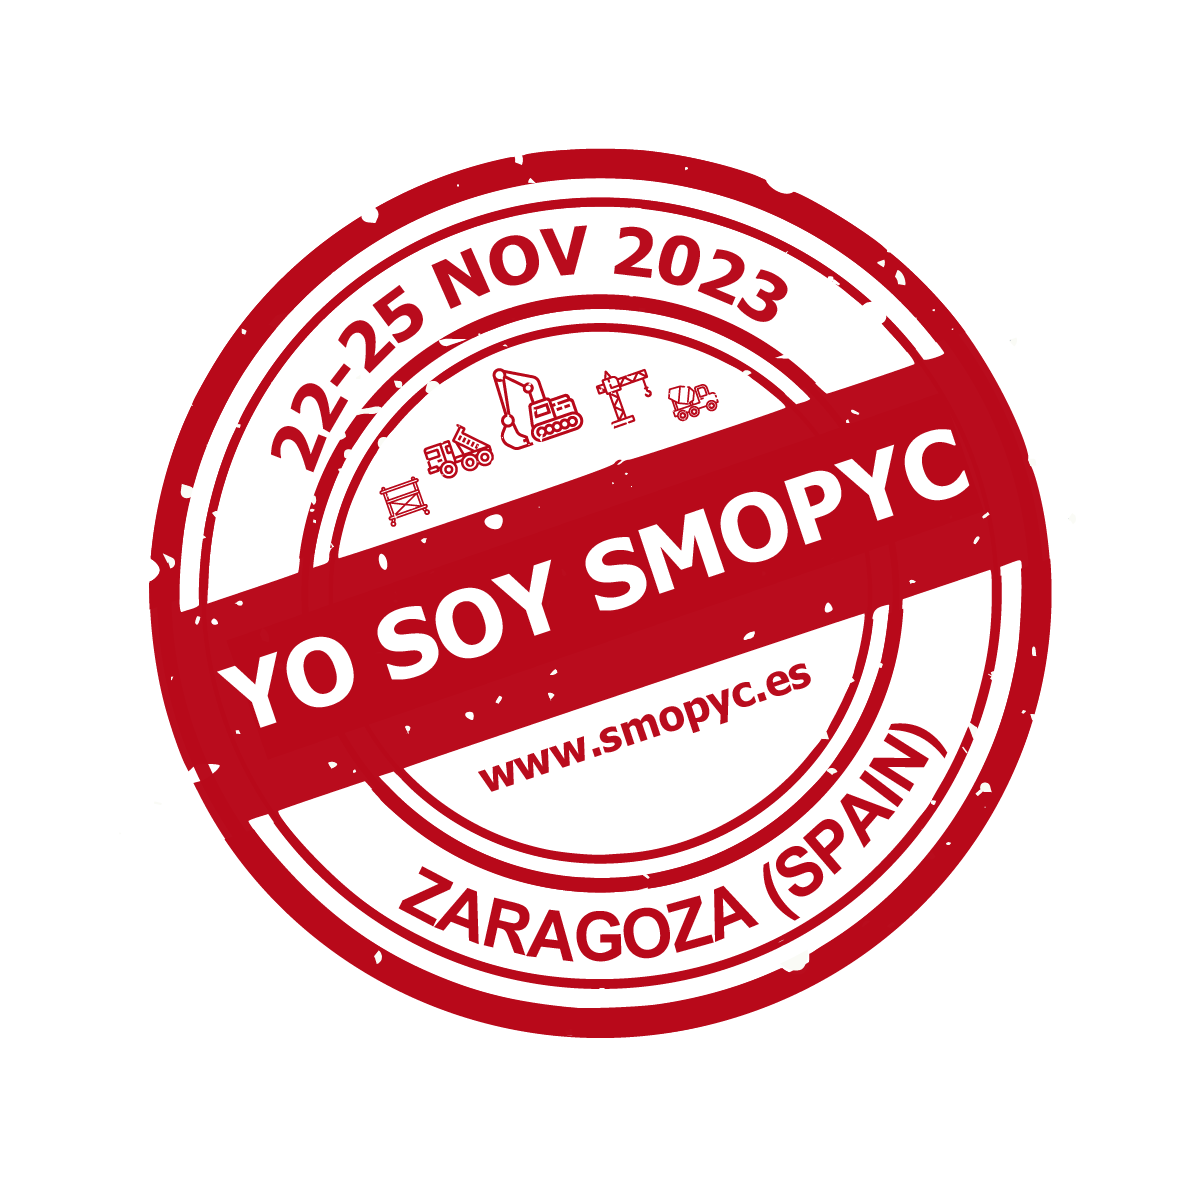 Smopyc logo